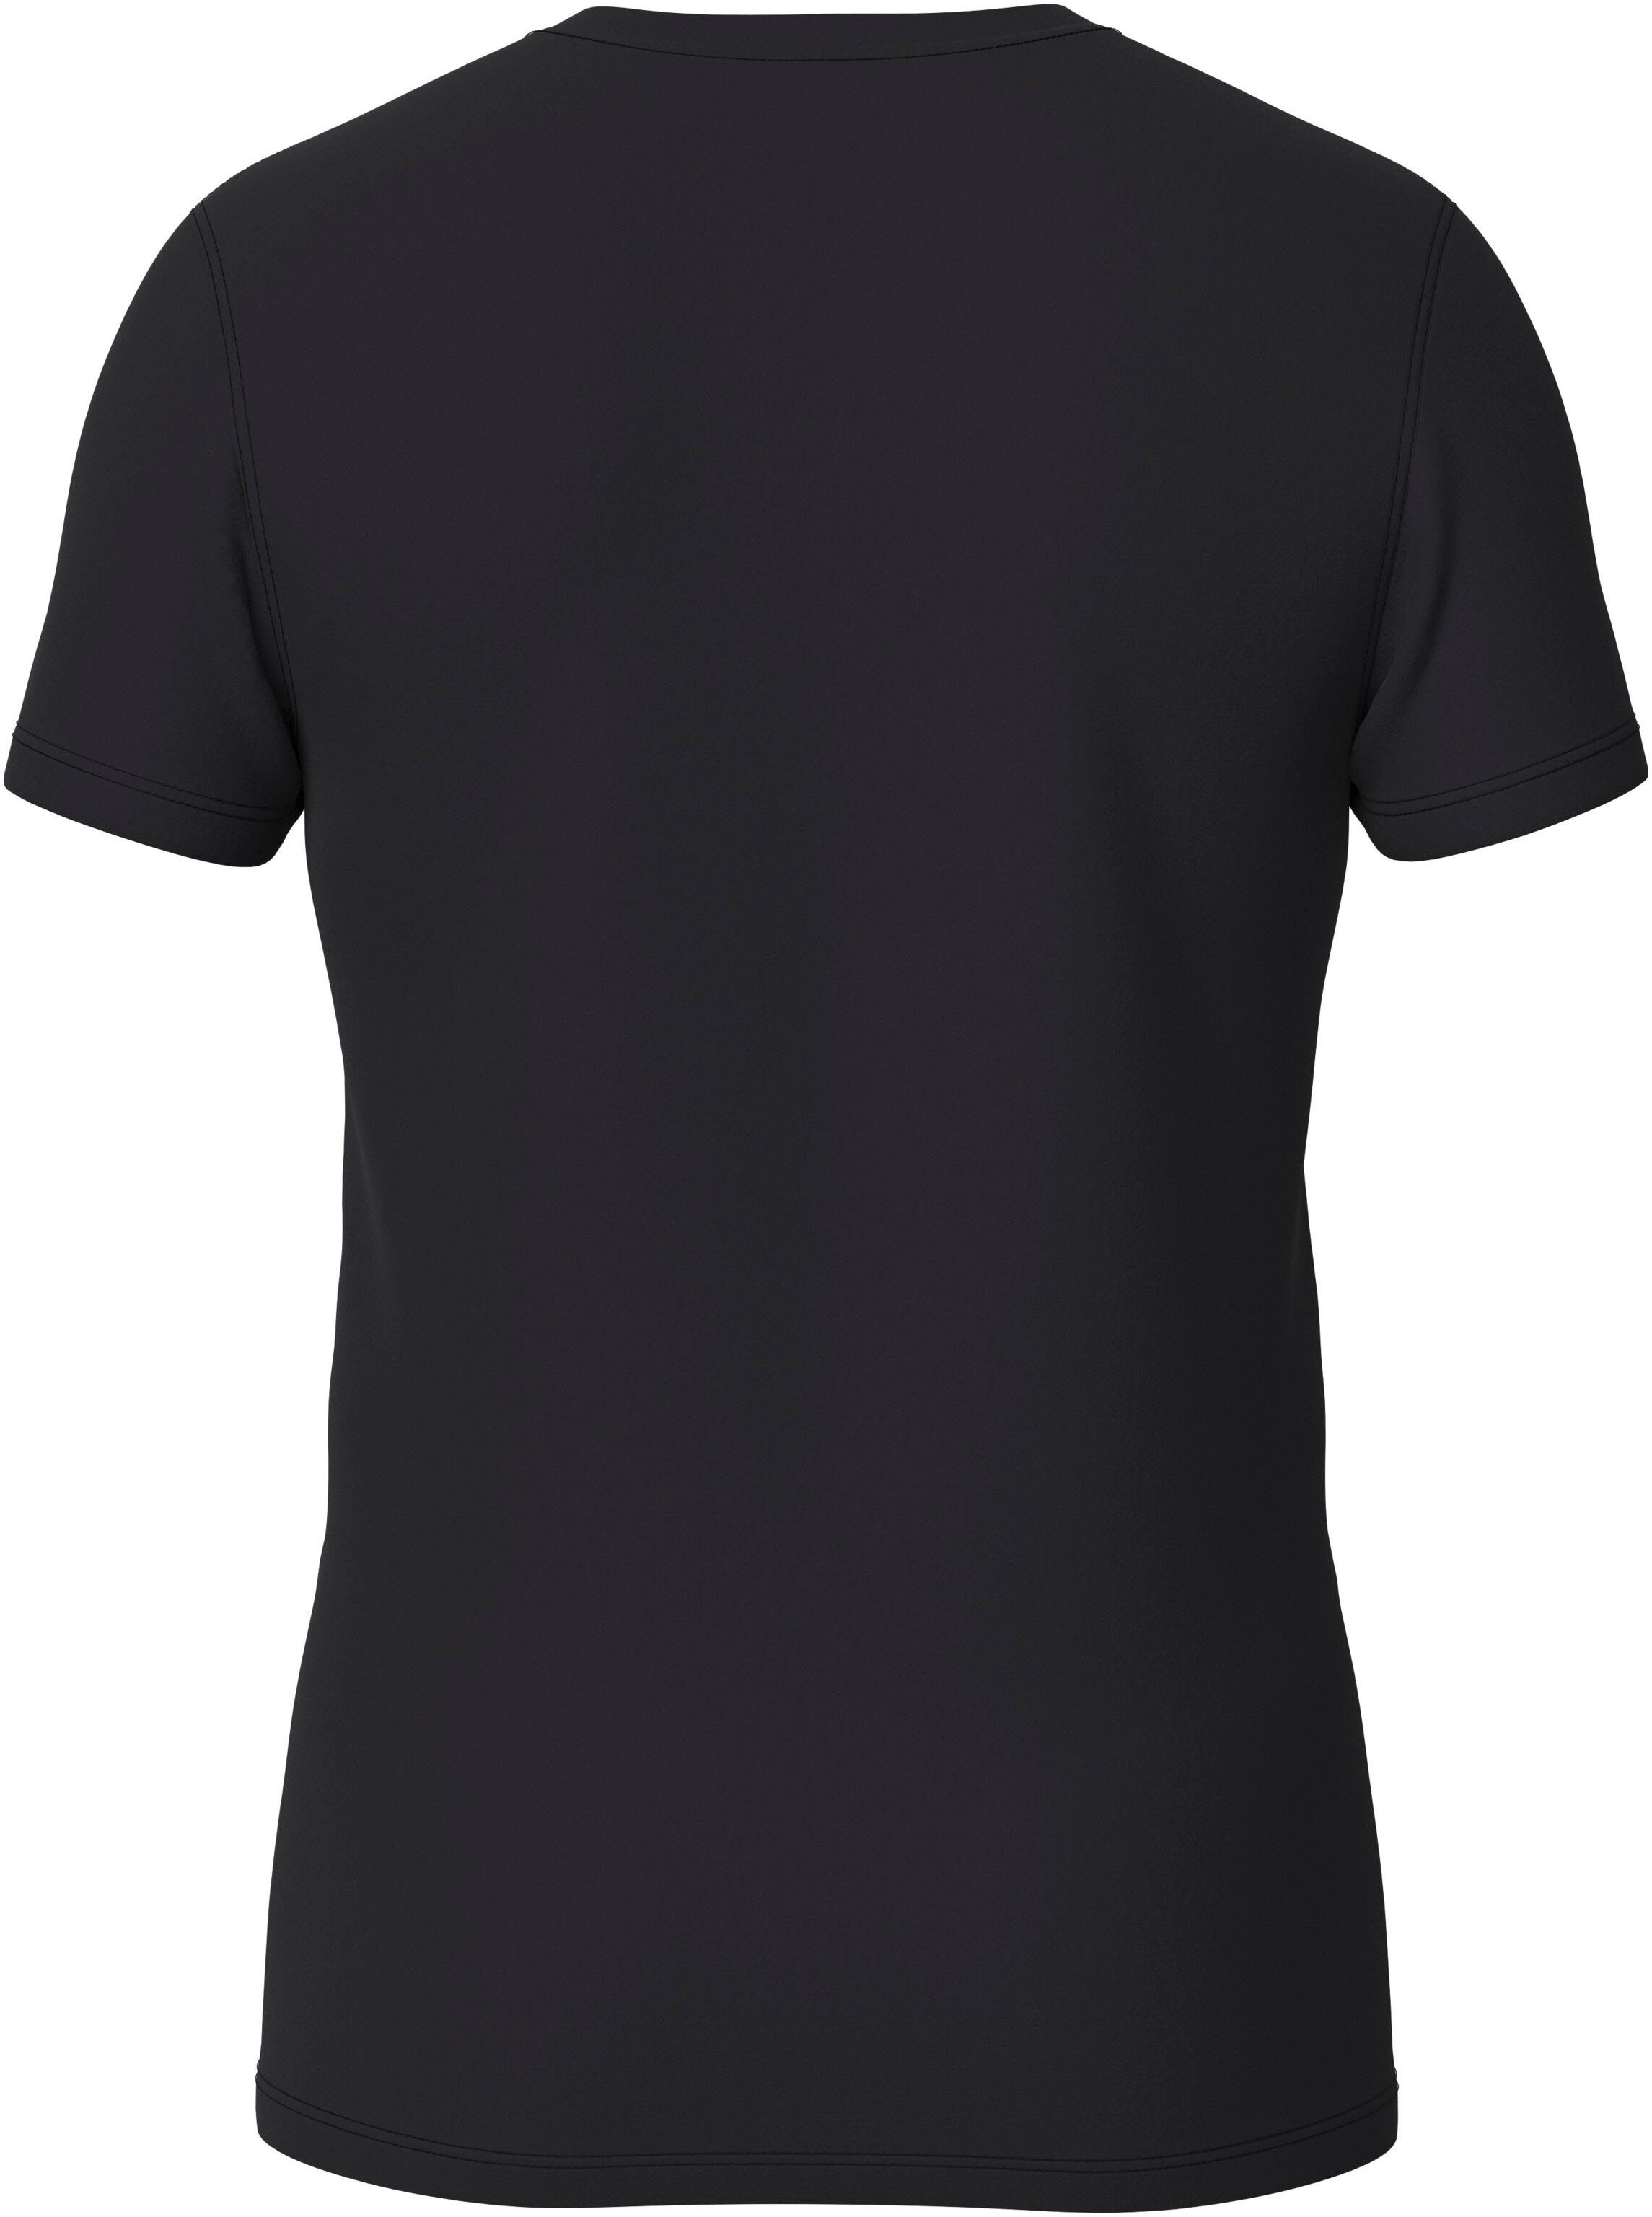 Chiemsee T-Shirt BlackBeauty